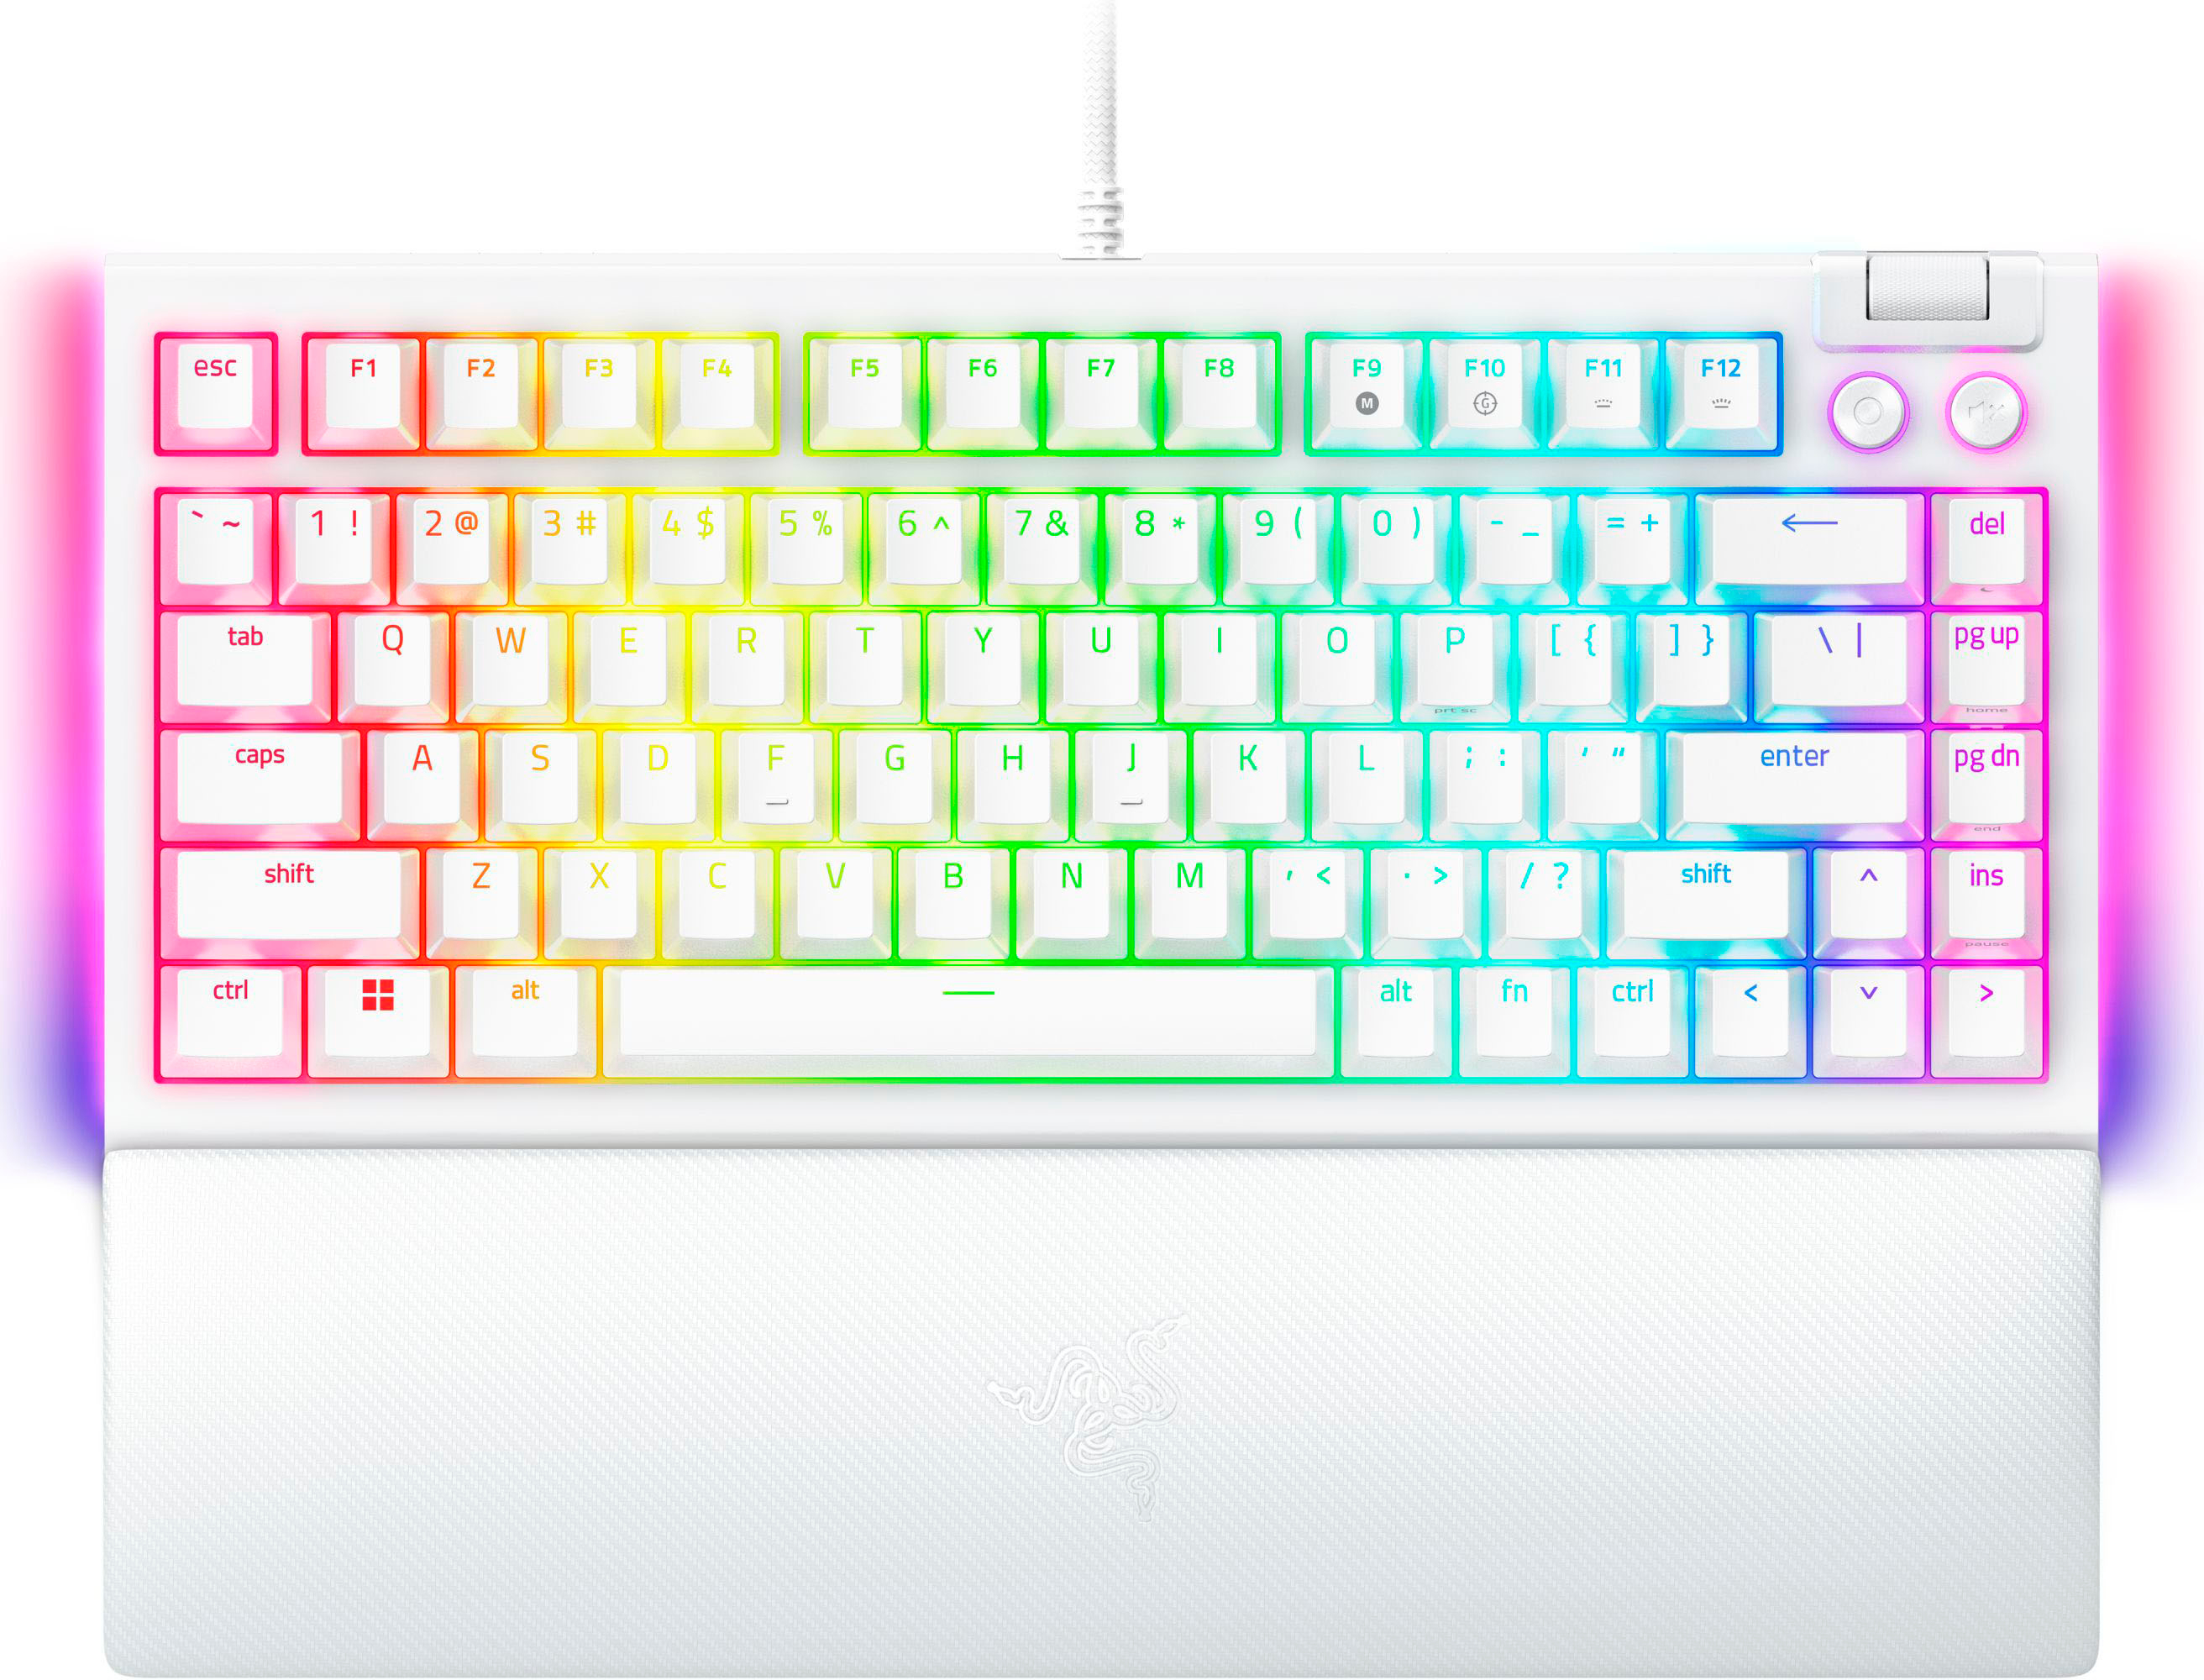 Razer BlackWidow V4 75% White Wired Keyboard (Orange / KR)